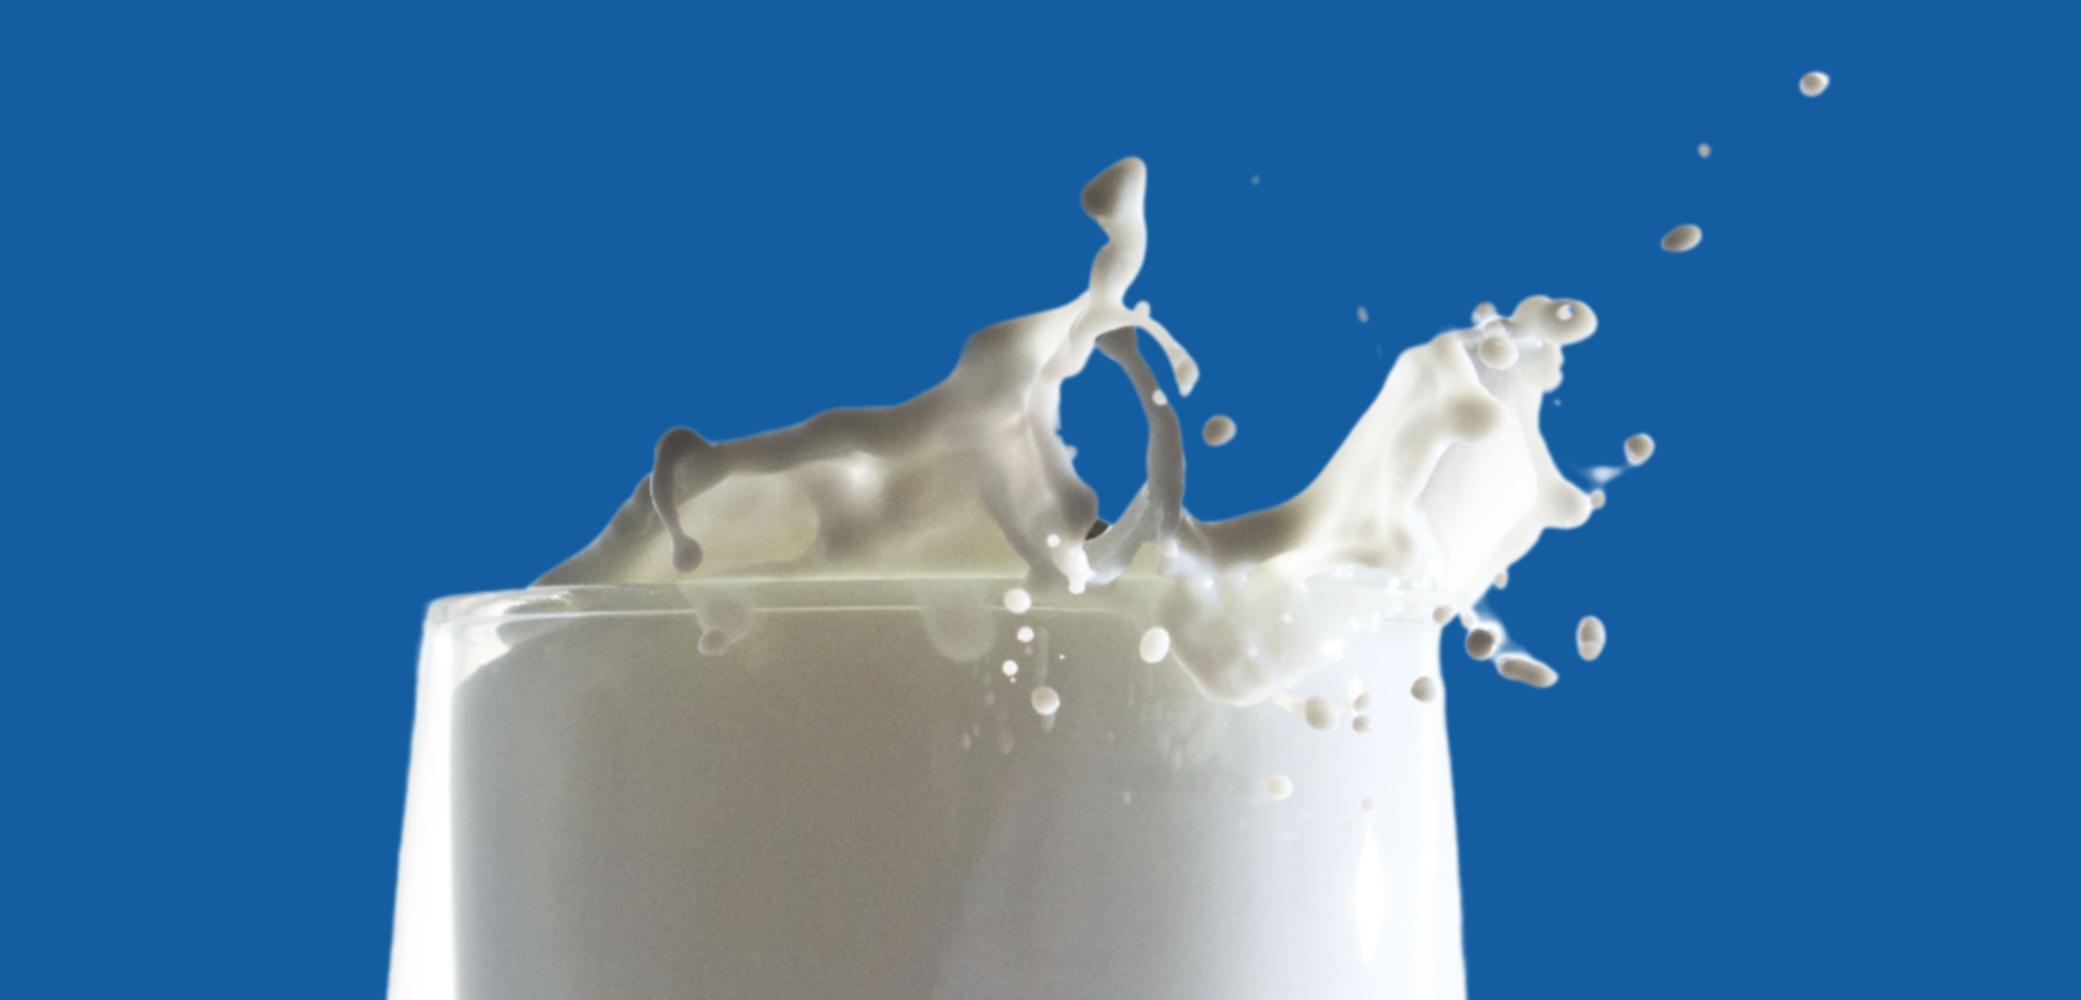 Fluid Milk Plant - DCI 40K, 20K Gal Refr Silos, Processors, Liquefiers, Homogenizers, Federal Fillers, Horiz Tanks, Pumps, CIP, COP, Support